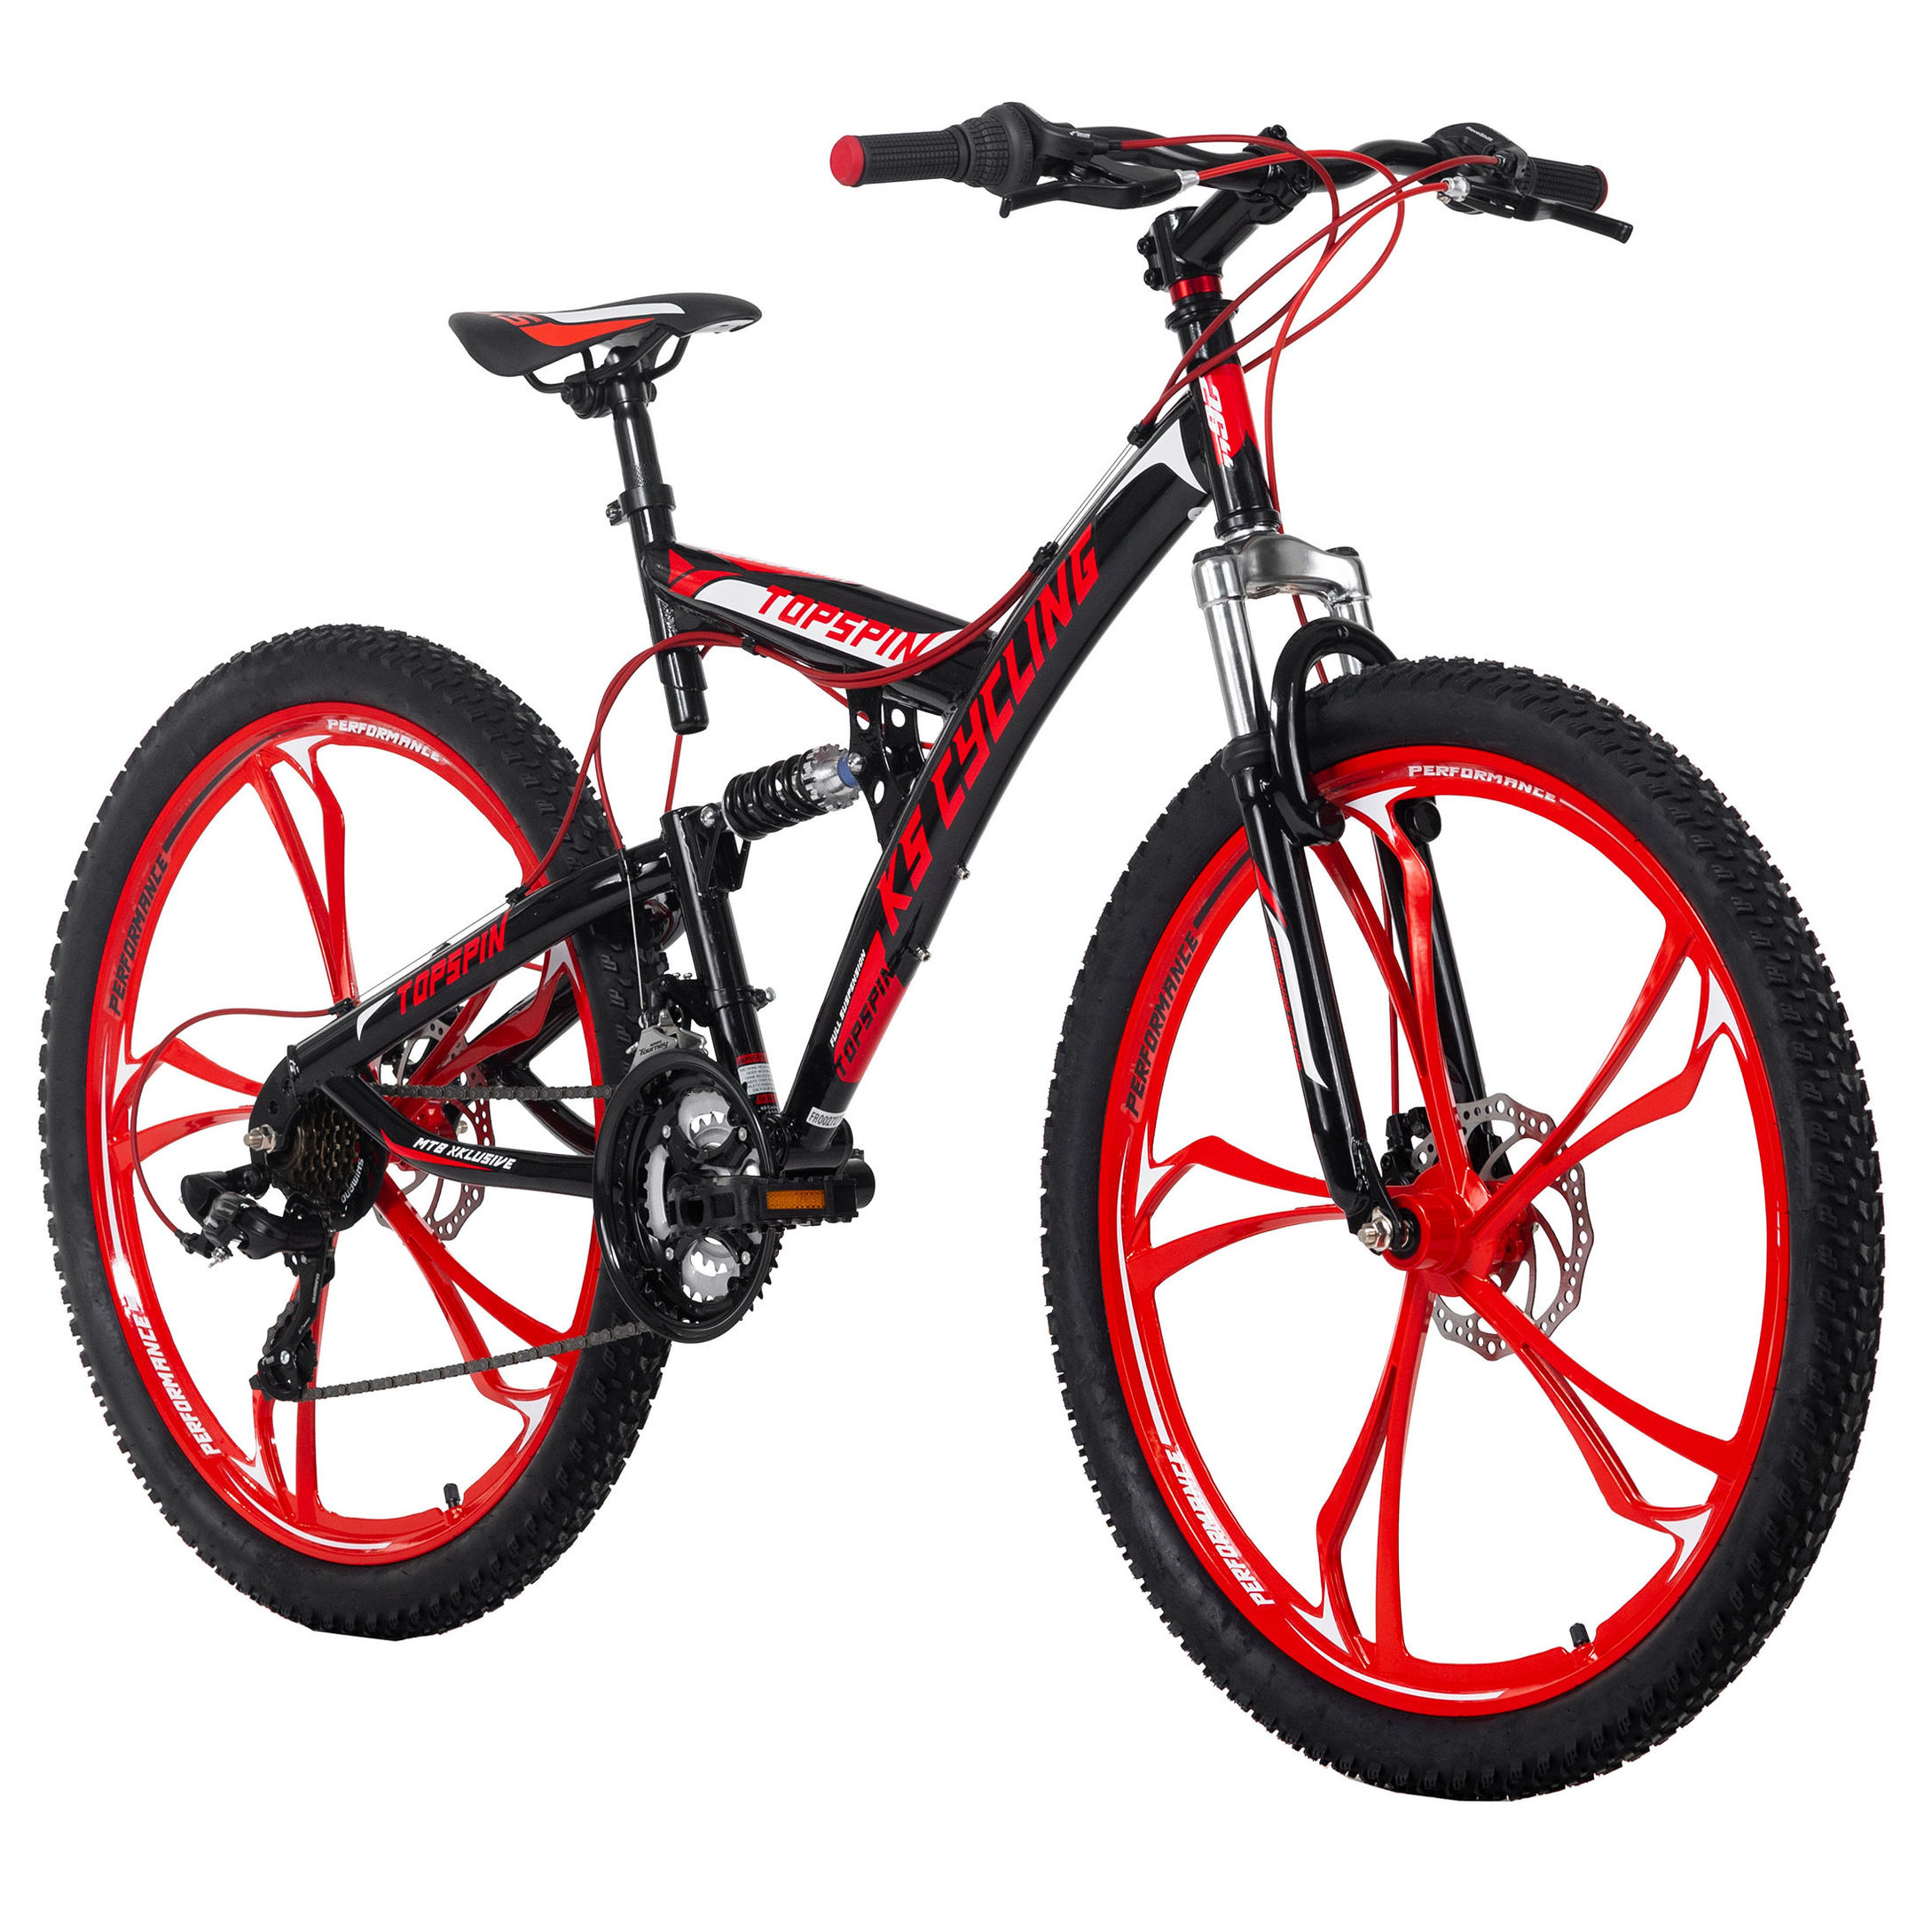 KS Cycling Mountainbike Fully 26 Zoll Topspin schwarz-rot Größe: 51 cm  online kaufen - Orbisana